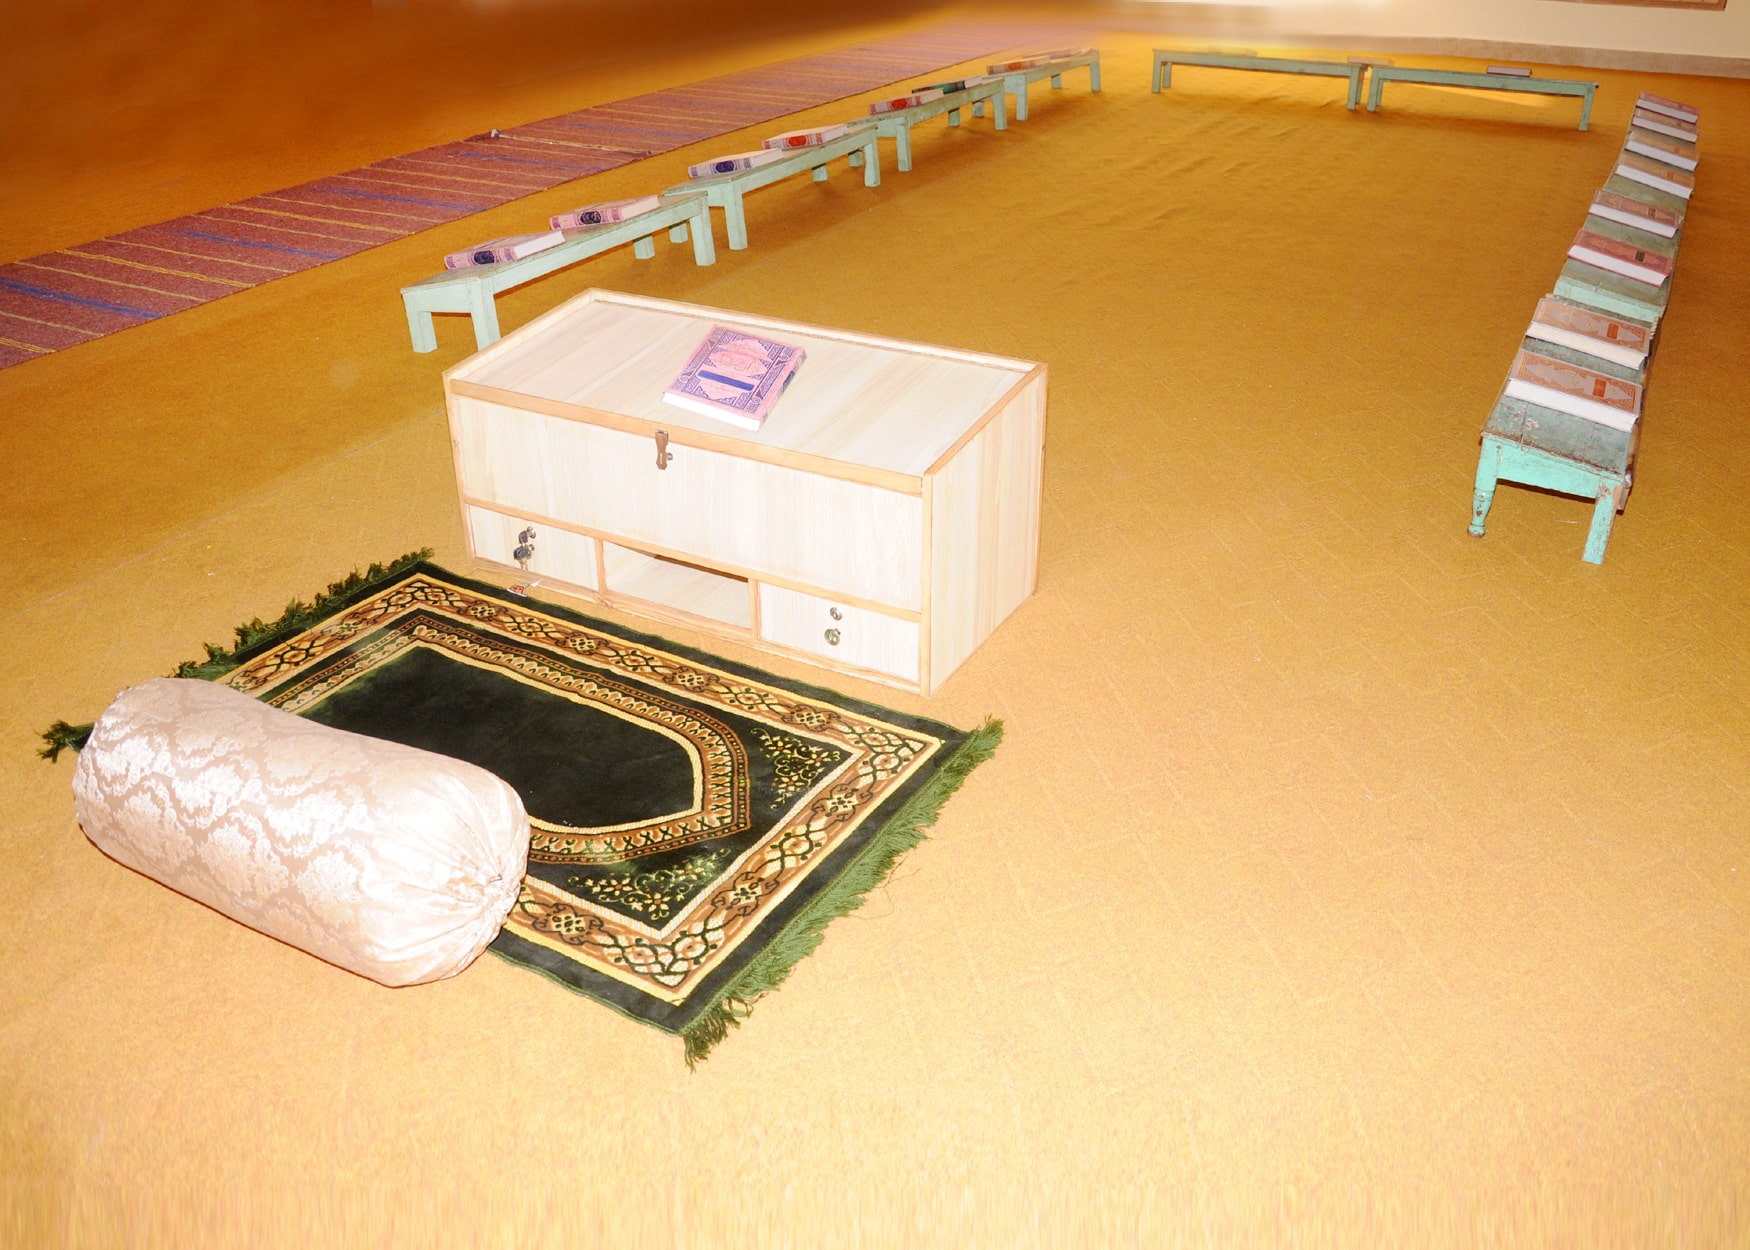 Masjid 1